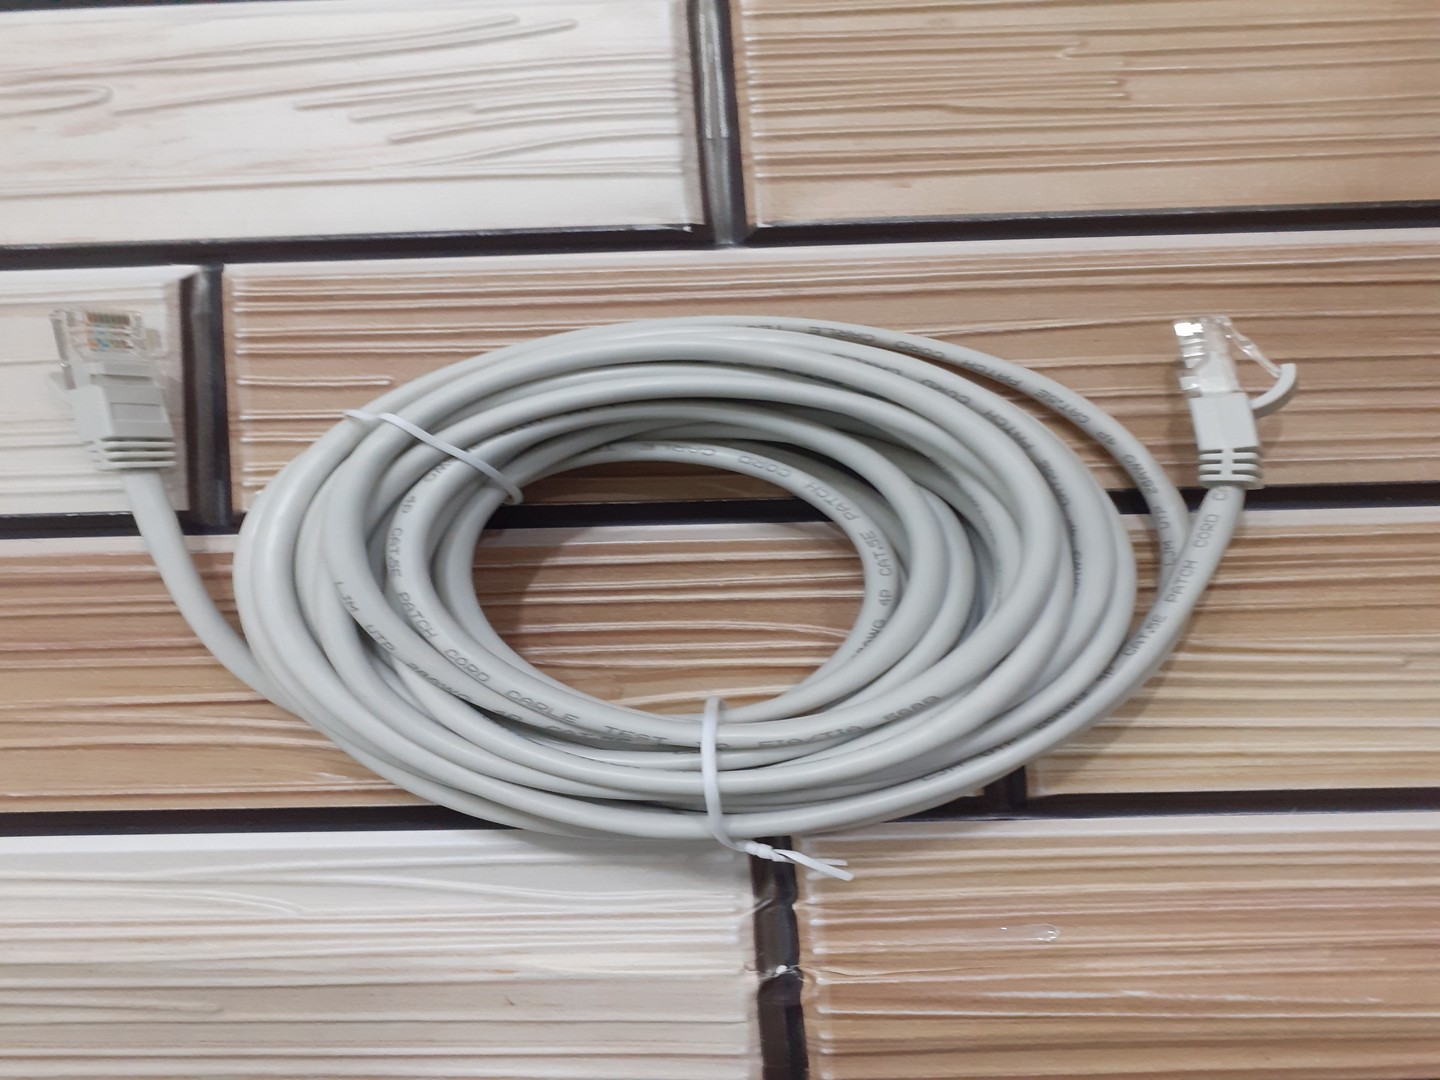 accesorios para electronica - Cable de red - Cable UTP Pacth Cord Categoría CAT5e 7.5M 25ft 2